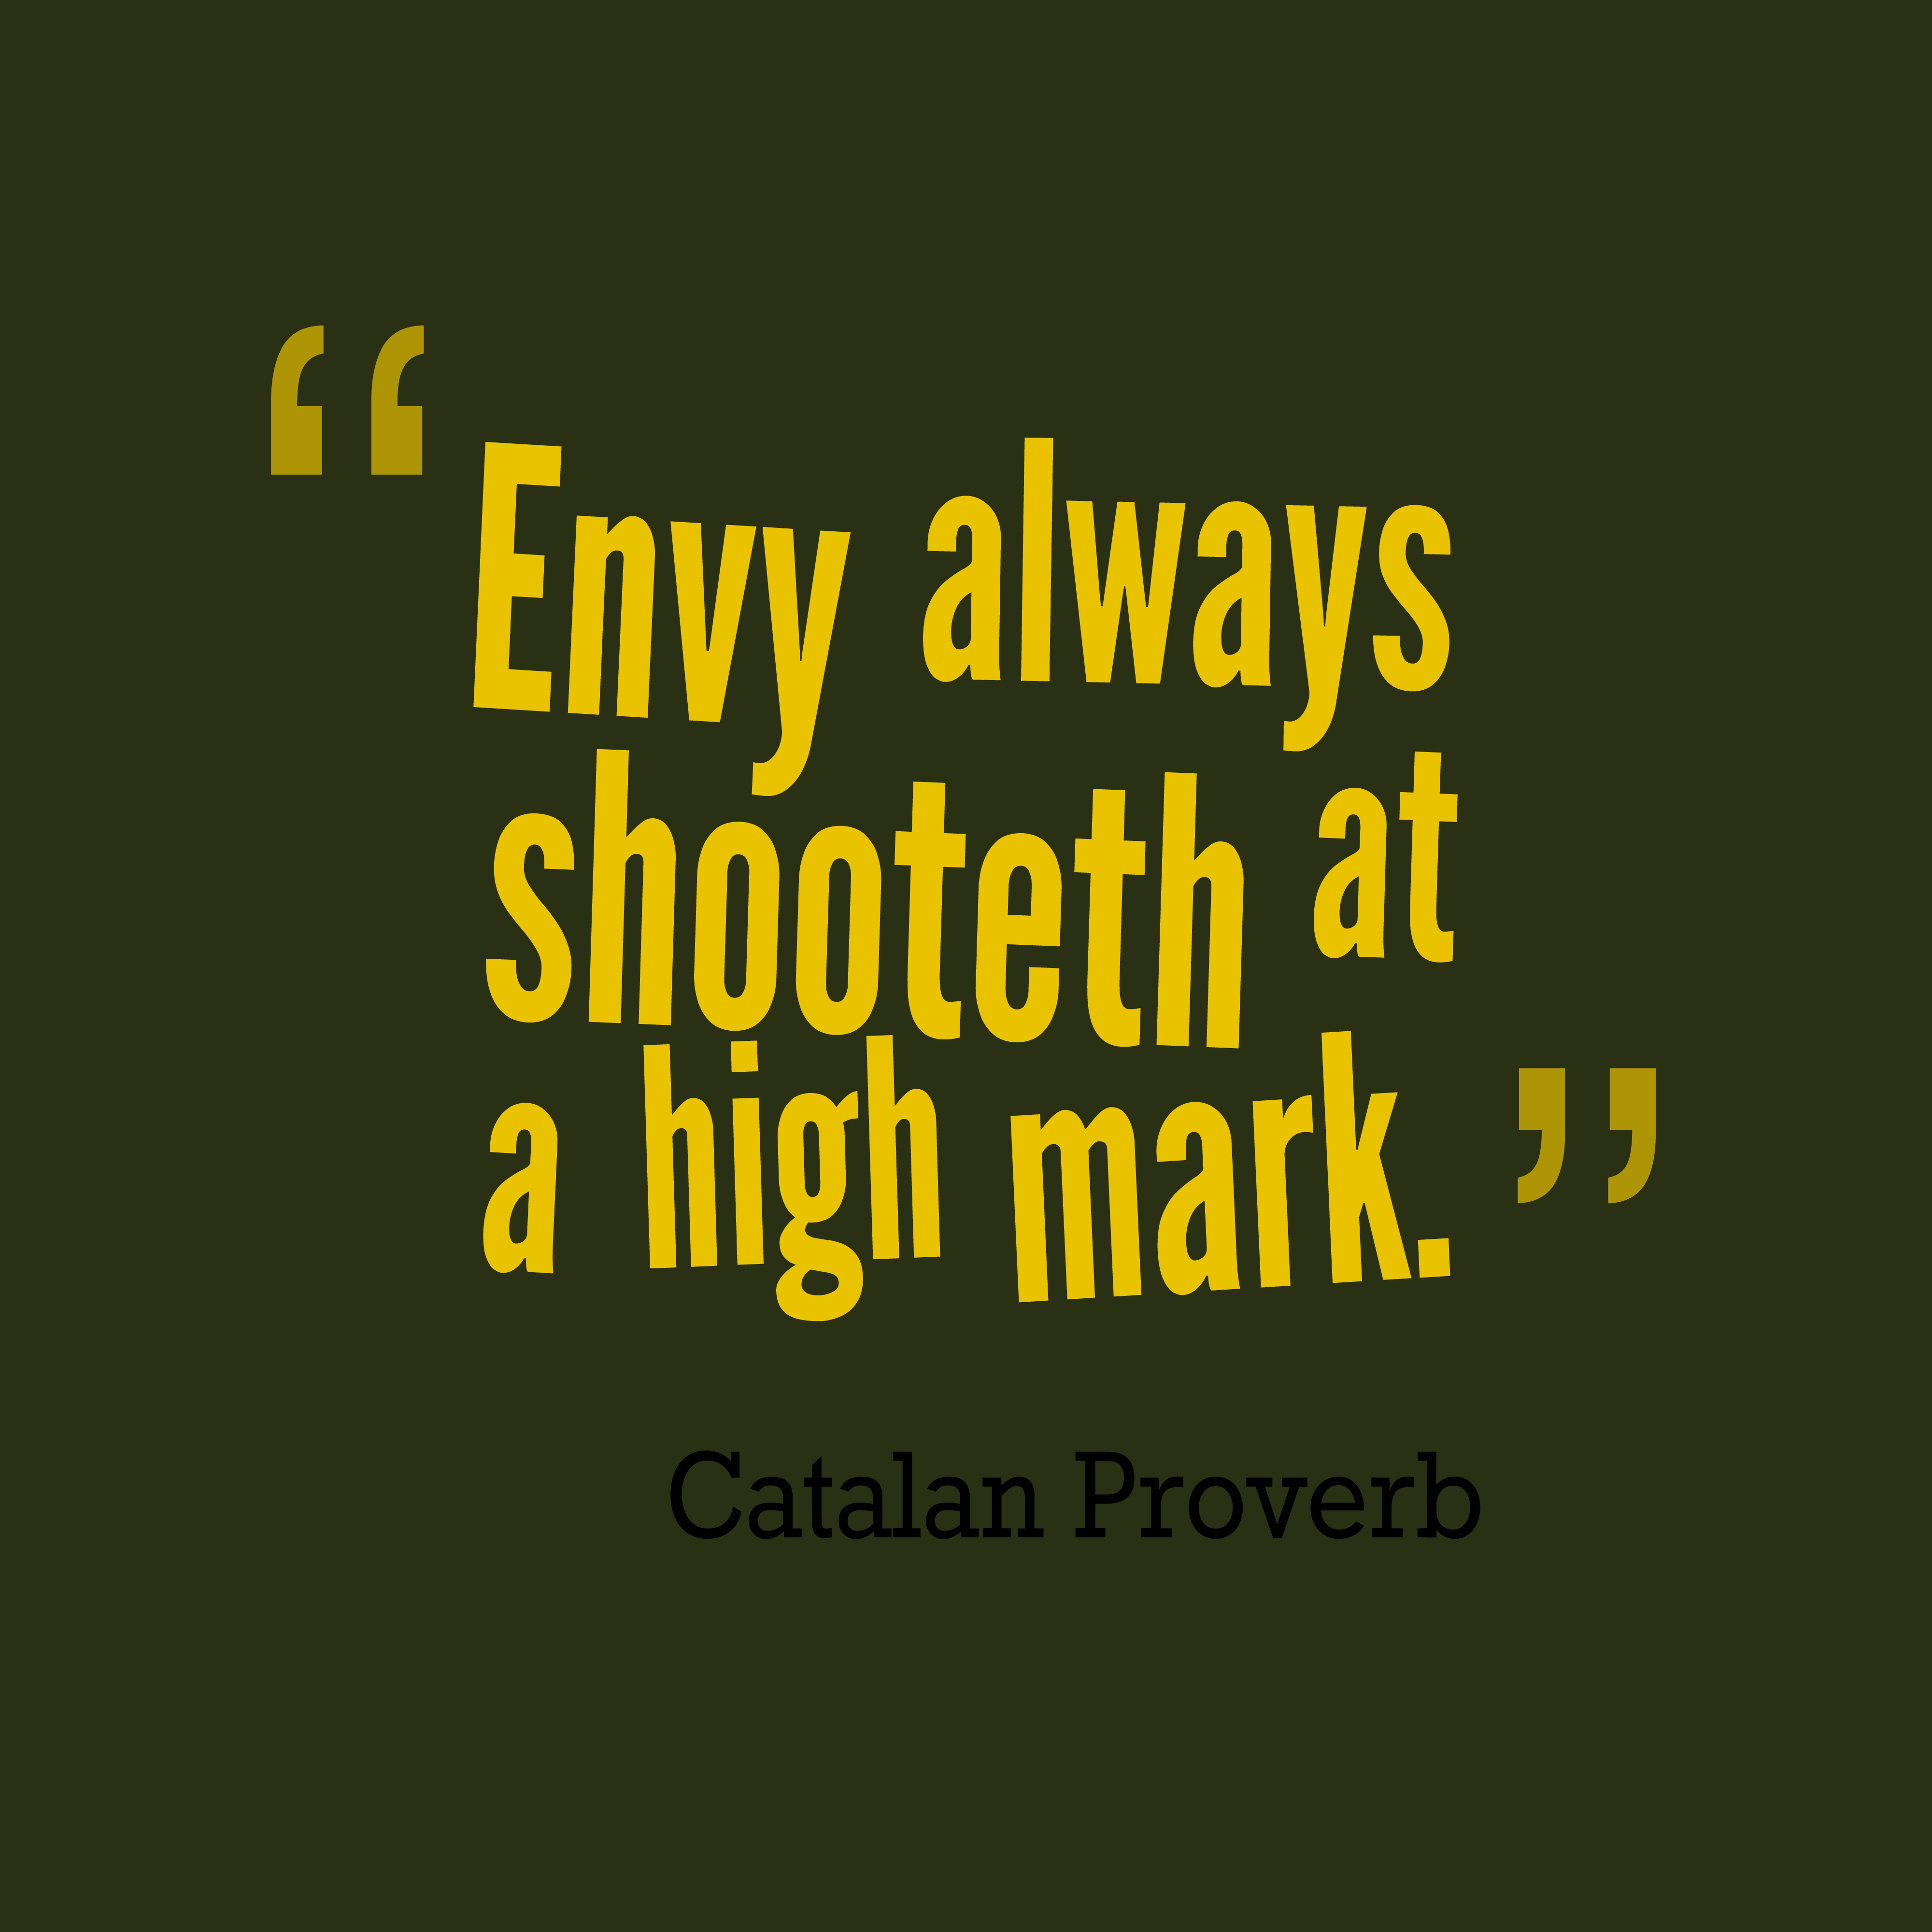 envy always shooteth at a high mark